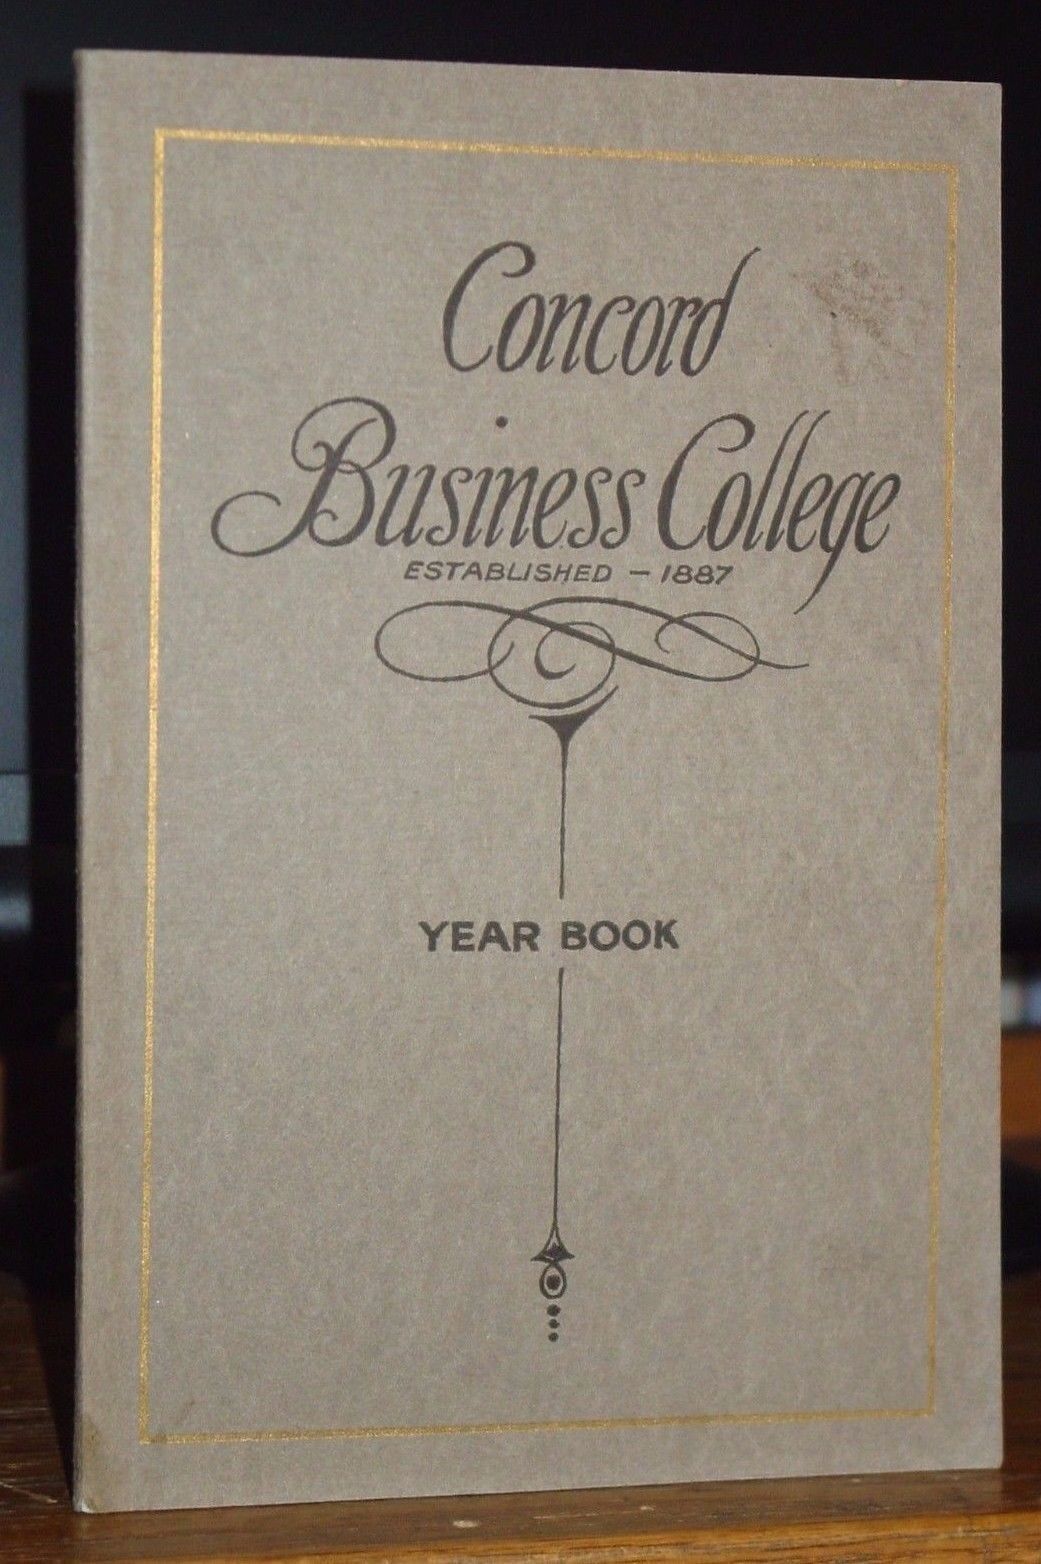 1913 Year Book Of The Concord Business College, Concord, New Hampshire, RARE